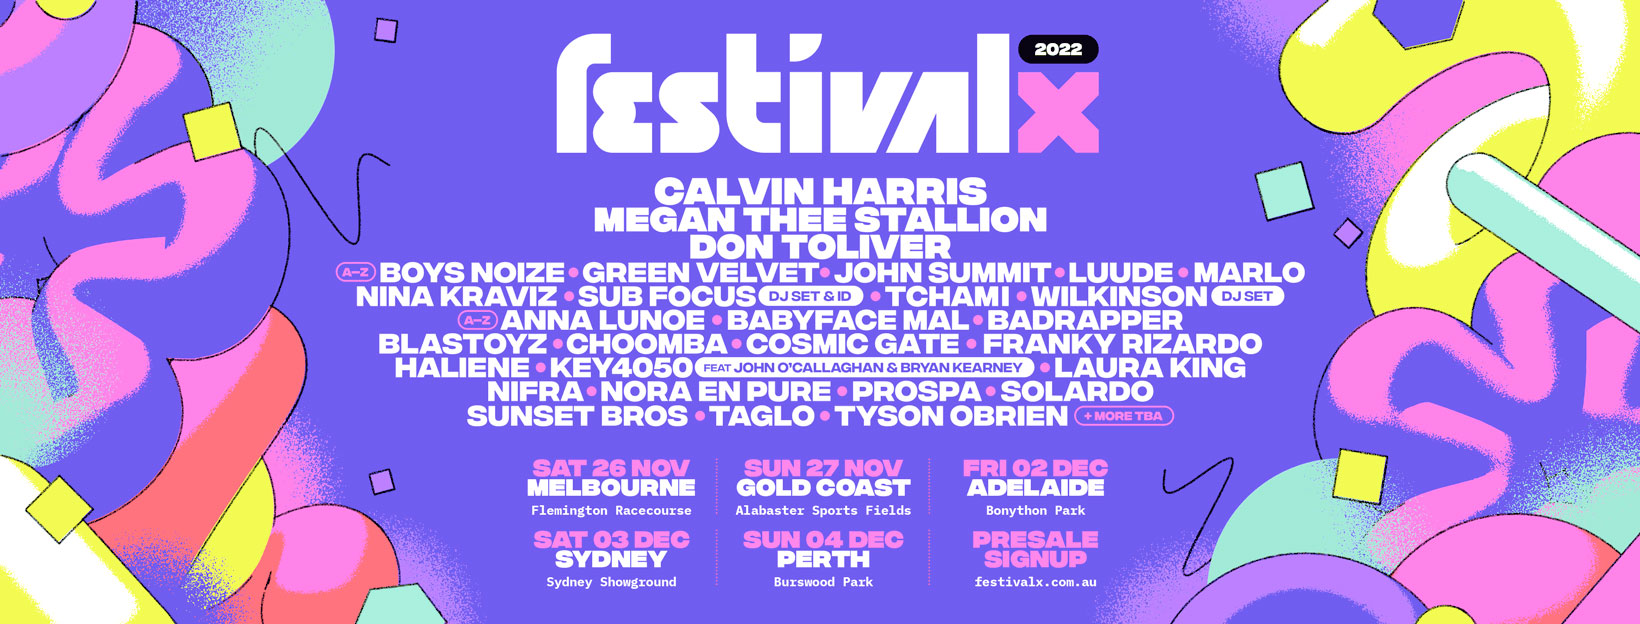 festival-x-2022-lineup-poster-oz-edm